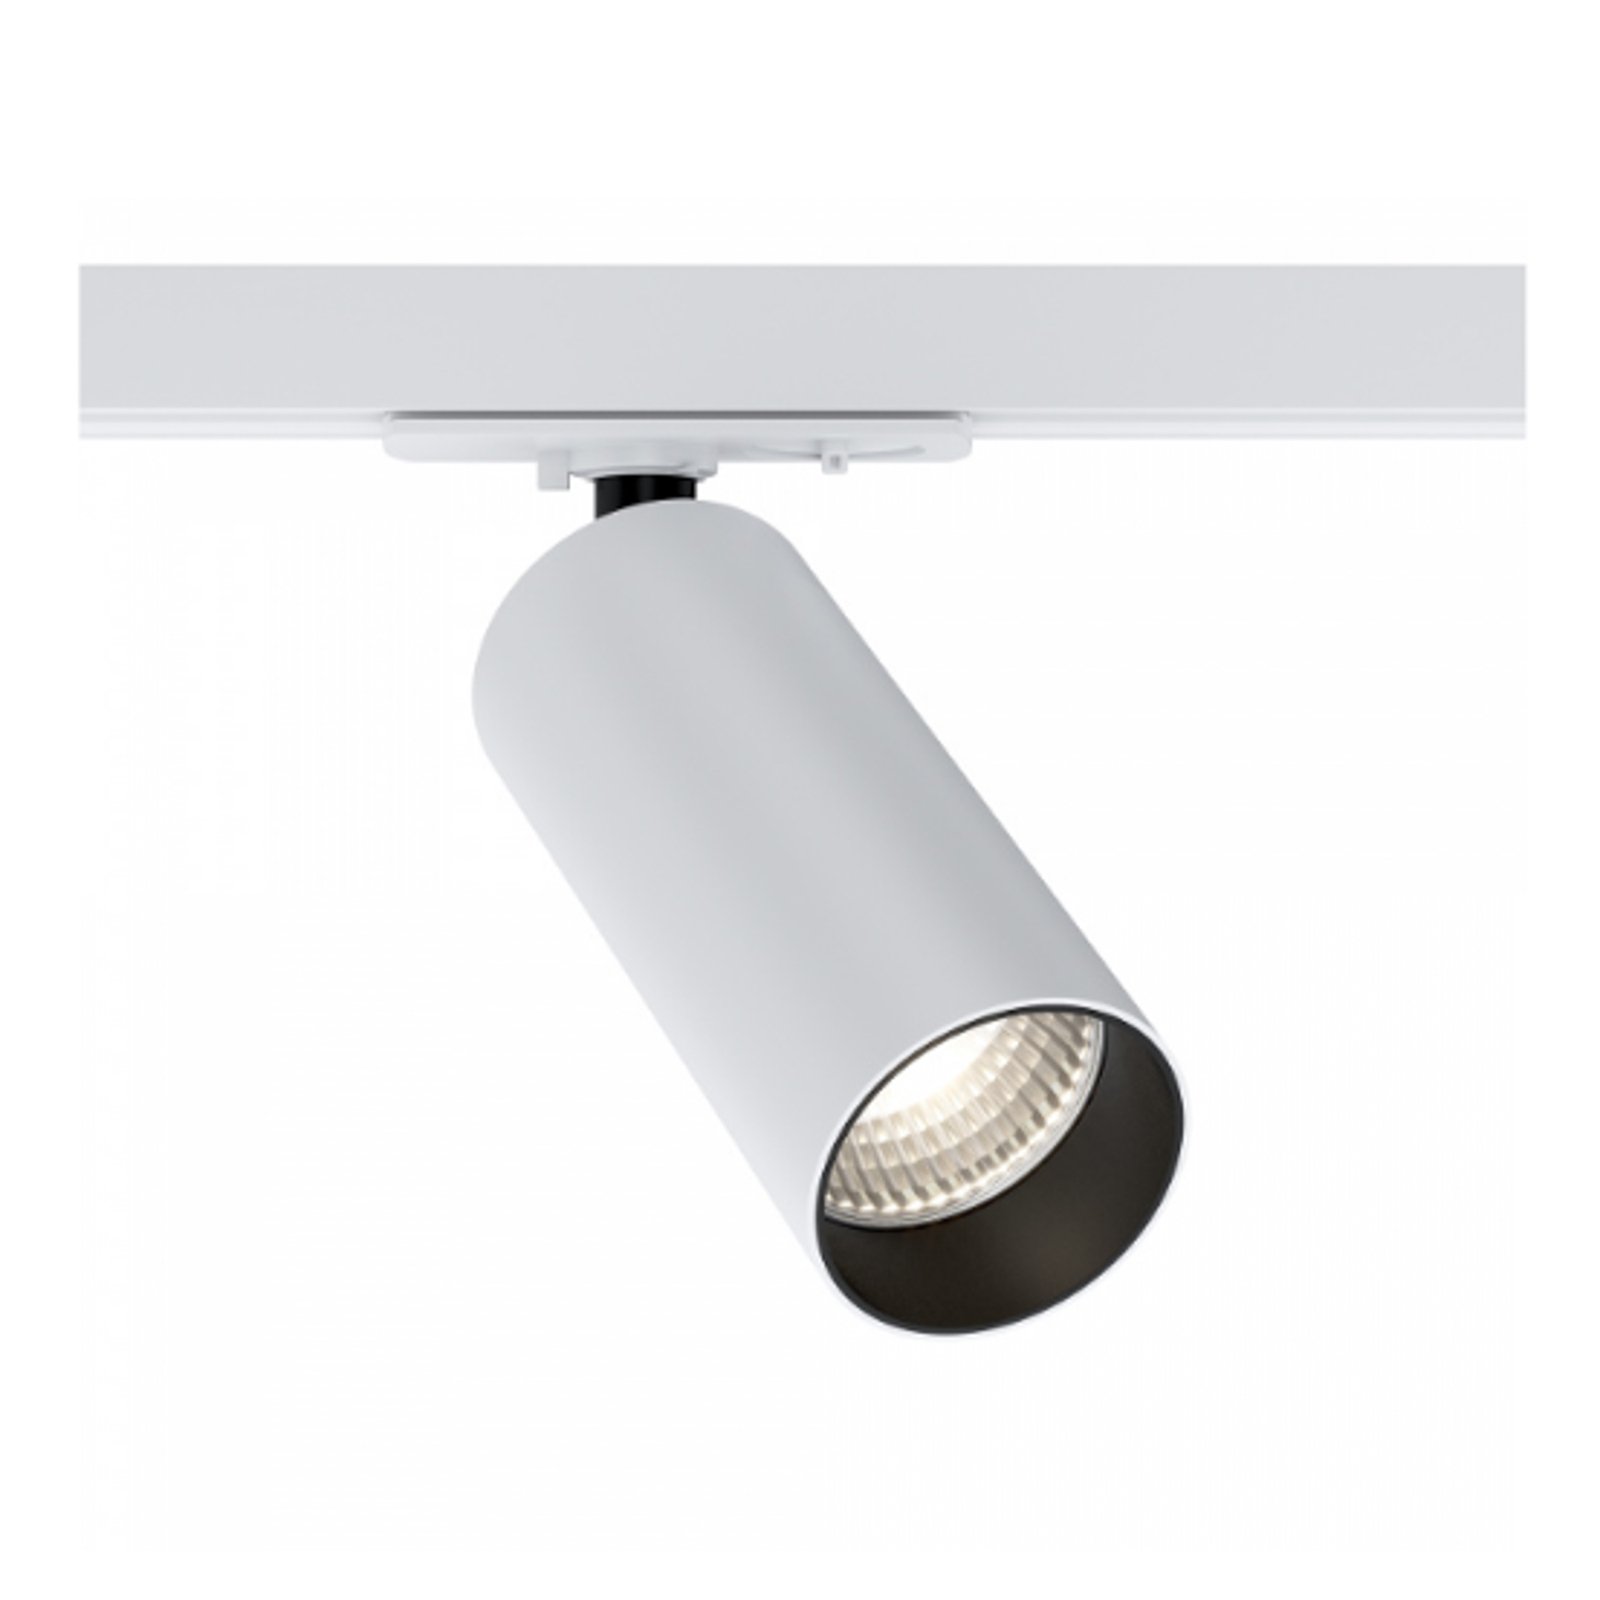 Maytoni Focus spot LED, système Unity, Triac, 930, blanc